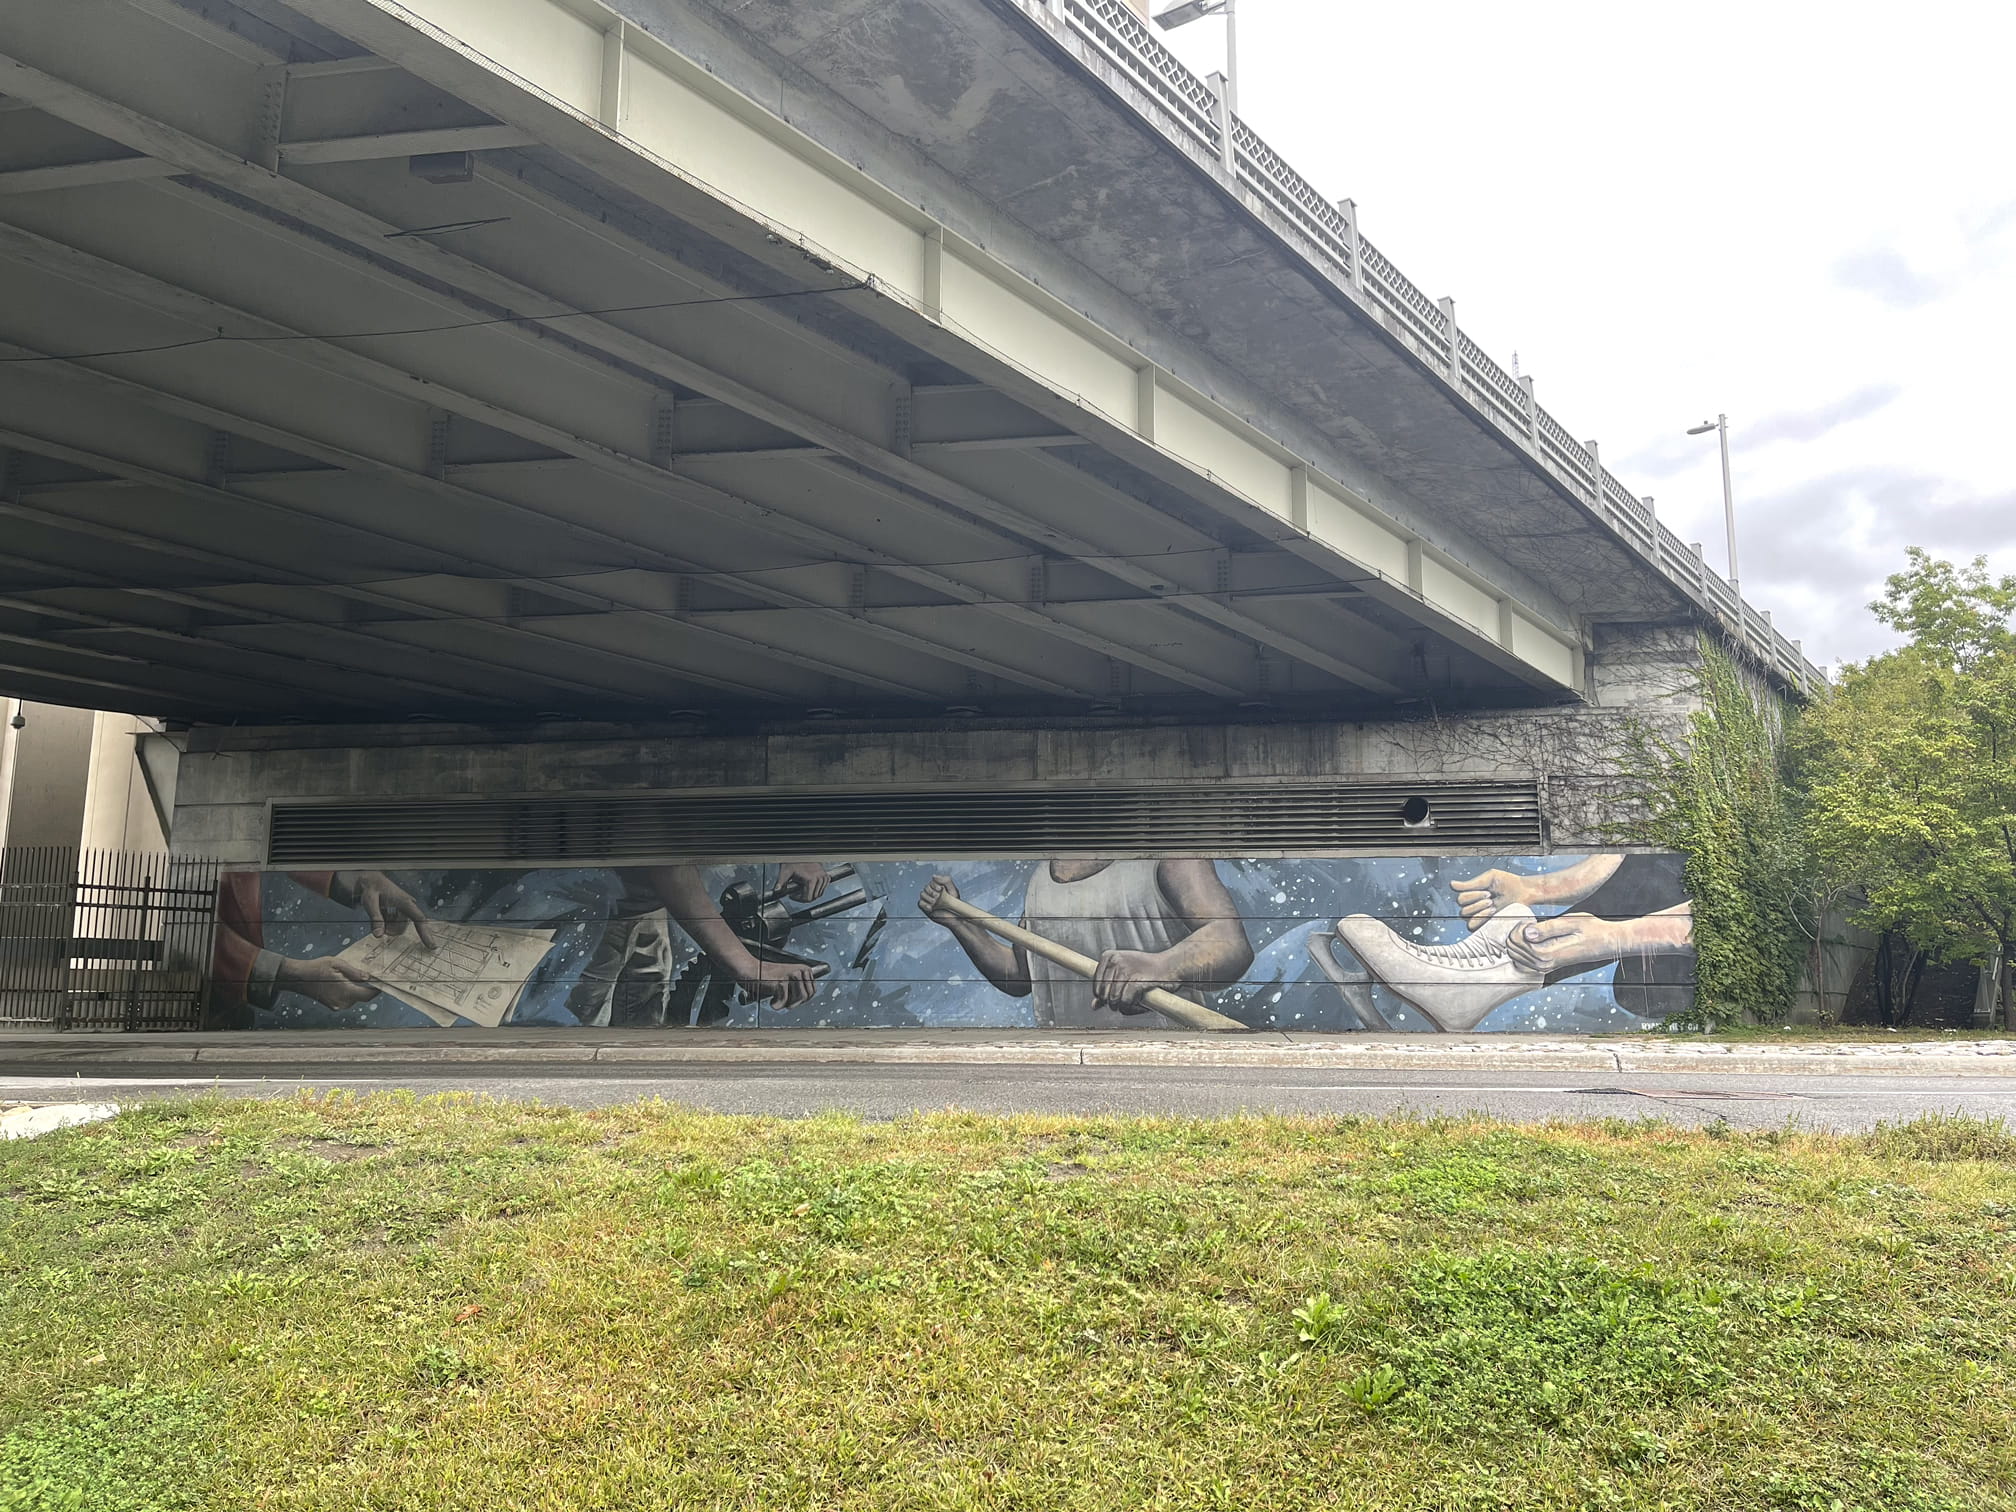 Mural in ottawa on the canal - plans mechanics bat skates